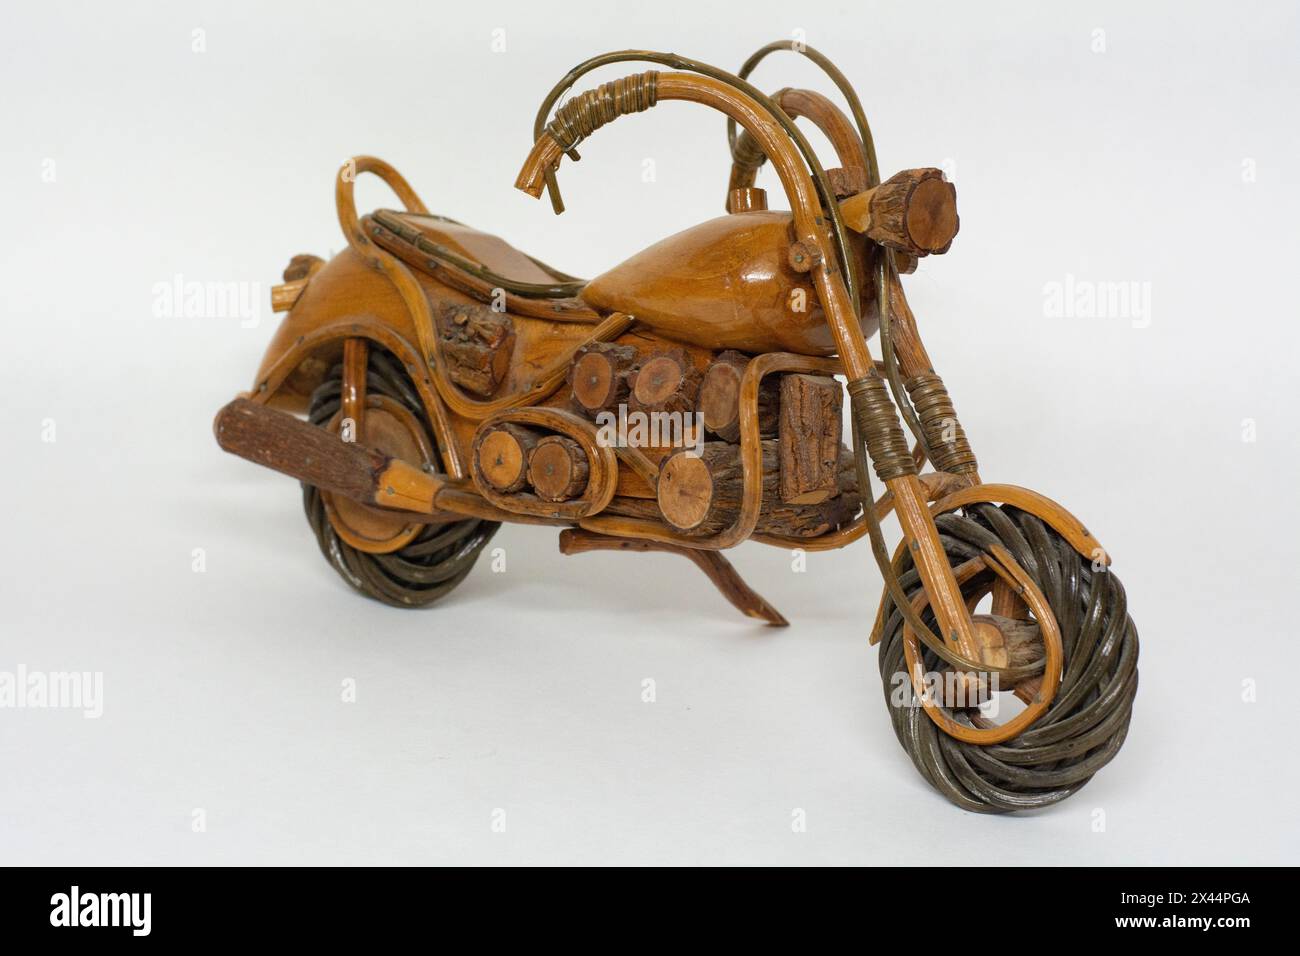 Motorradmodell aus Holz rechte Seite Foto Stock